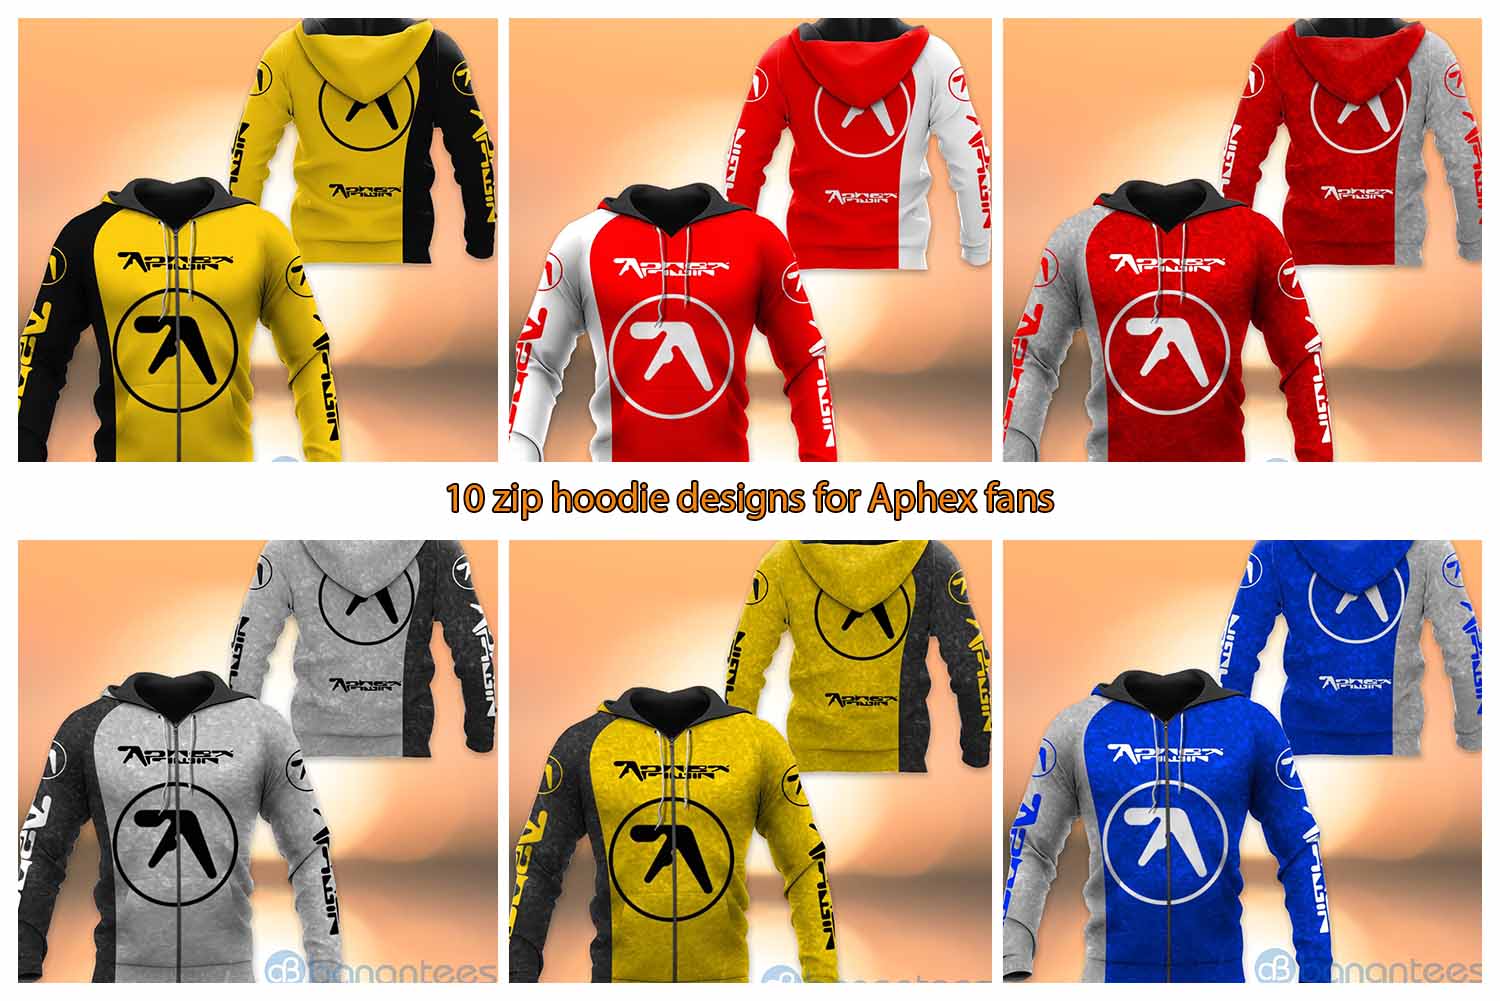 10 zip hoodie designs for Aphex fans